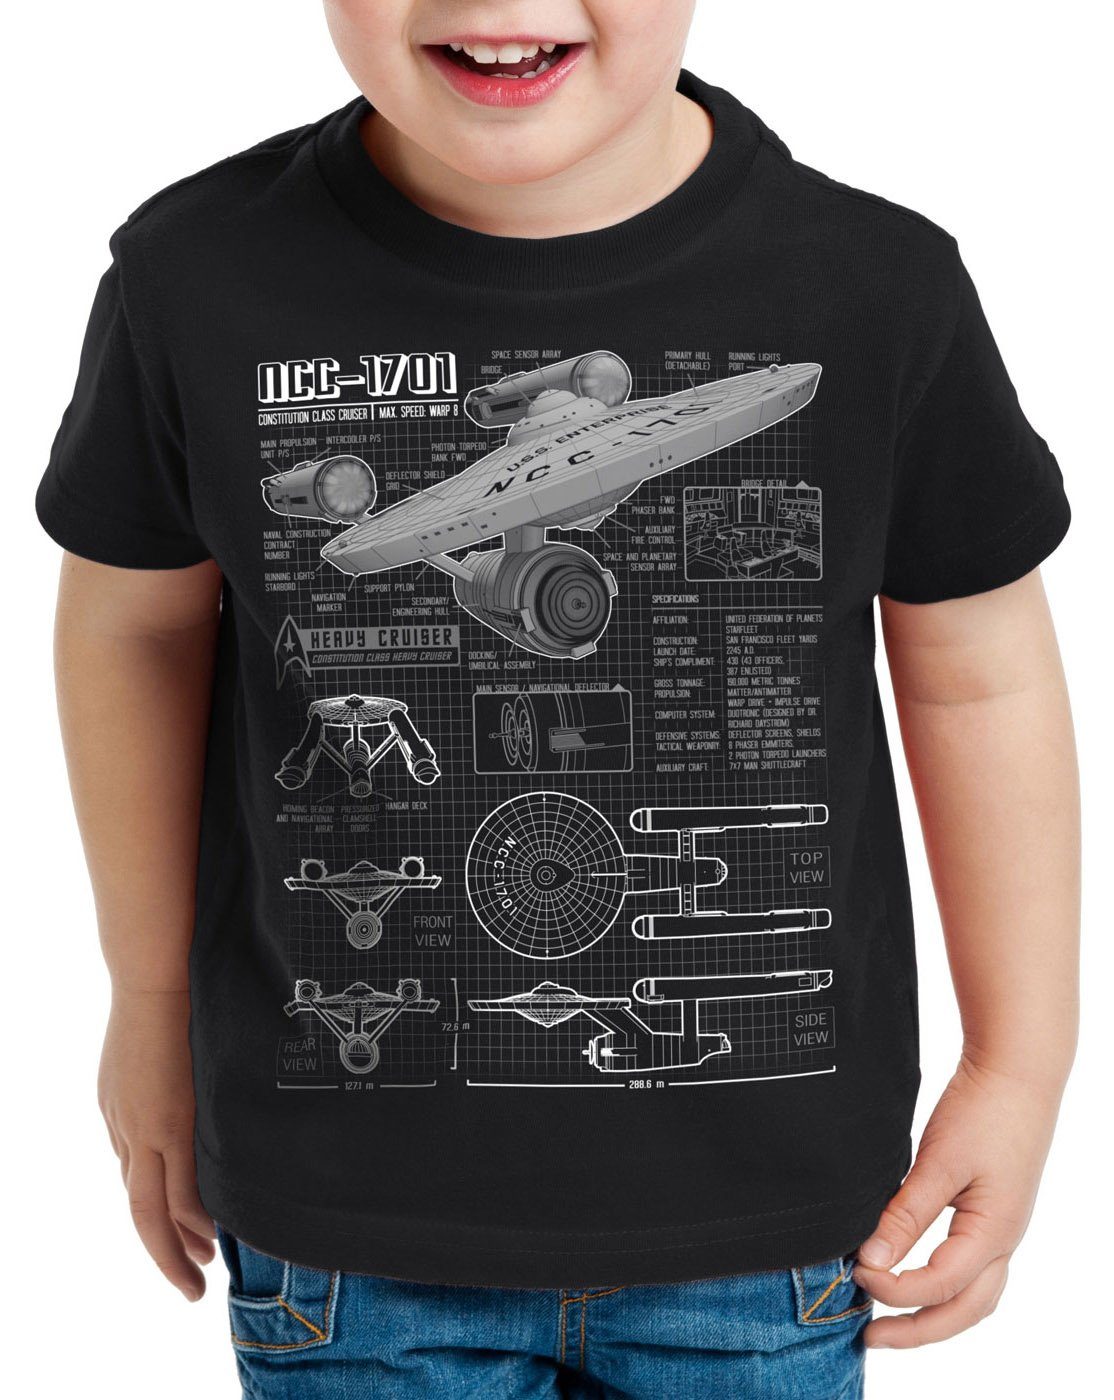 style3 Print-Shirt Kinder T-Shirt NCC-1701 christopher pike trek trekkie star schwarz